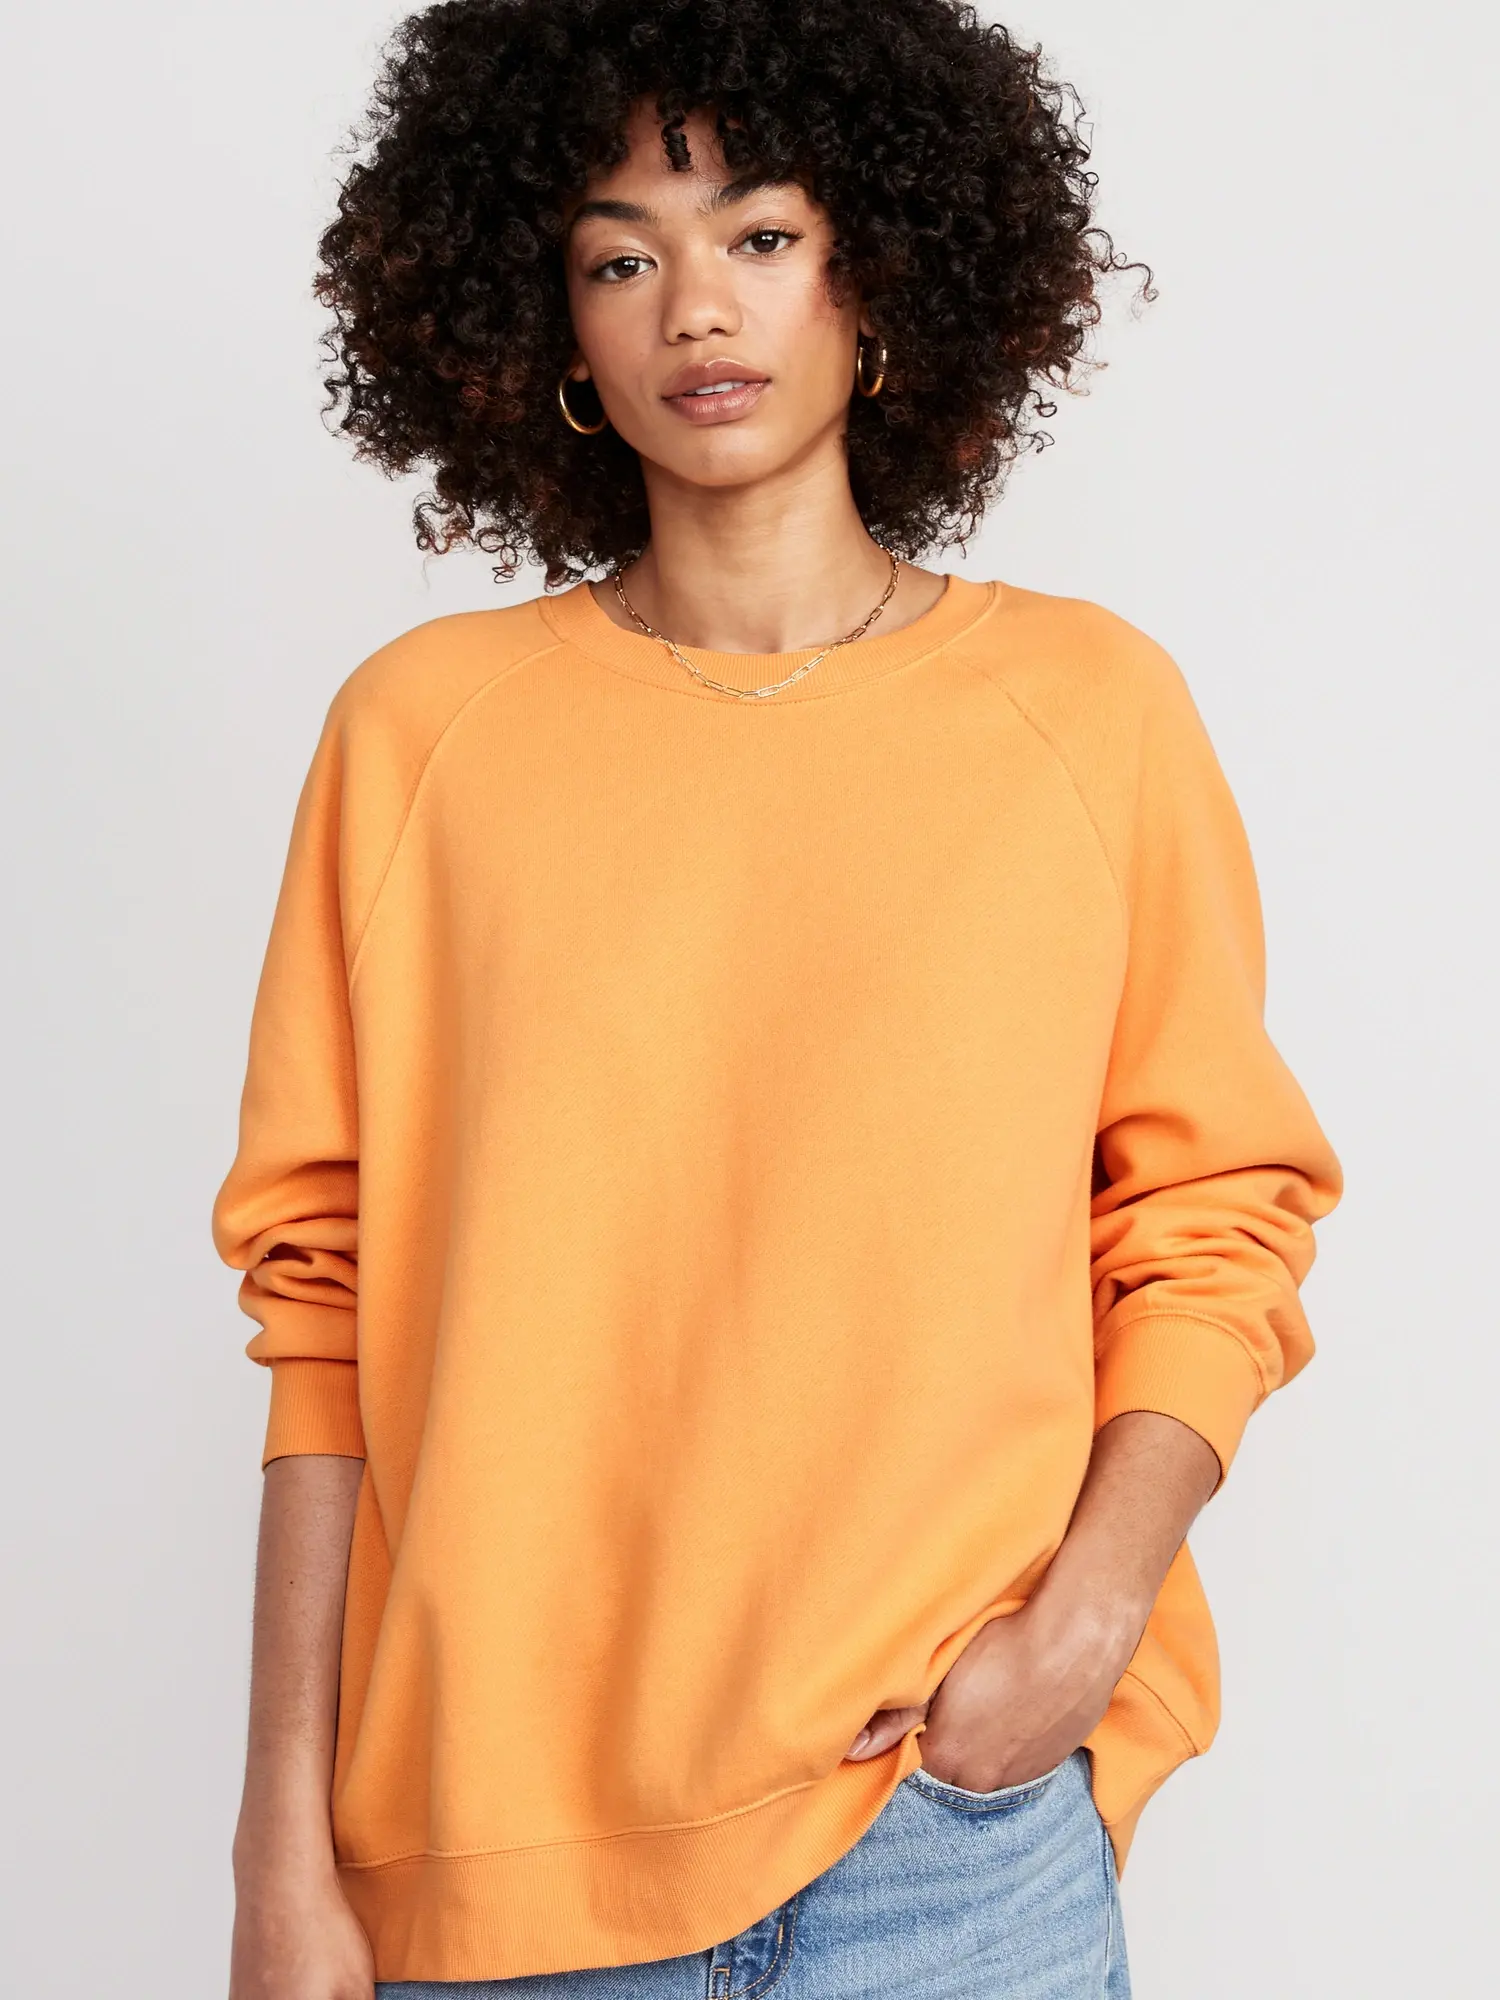 Old Navy - Oversized Vintage Tunic Sweatshirt for Women orange